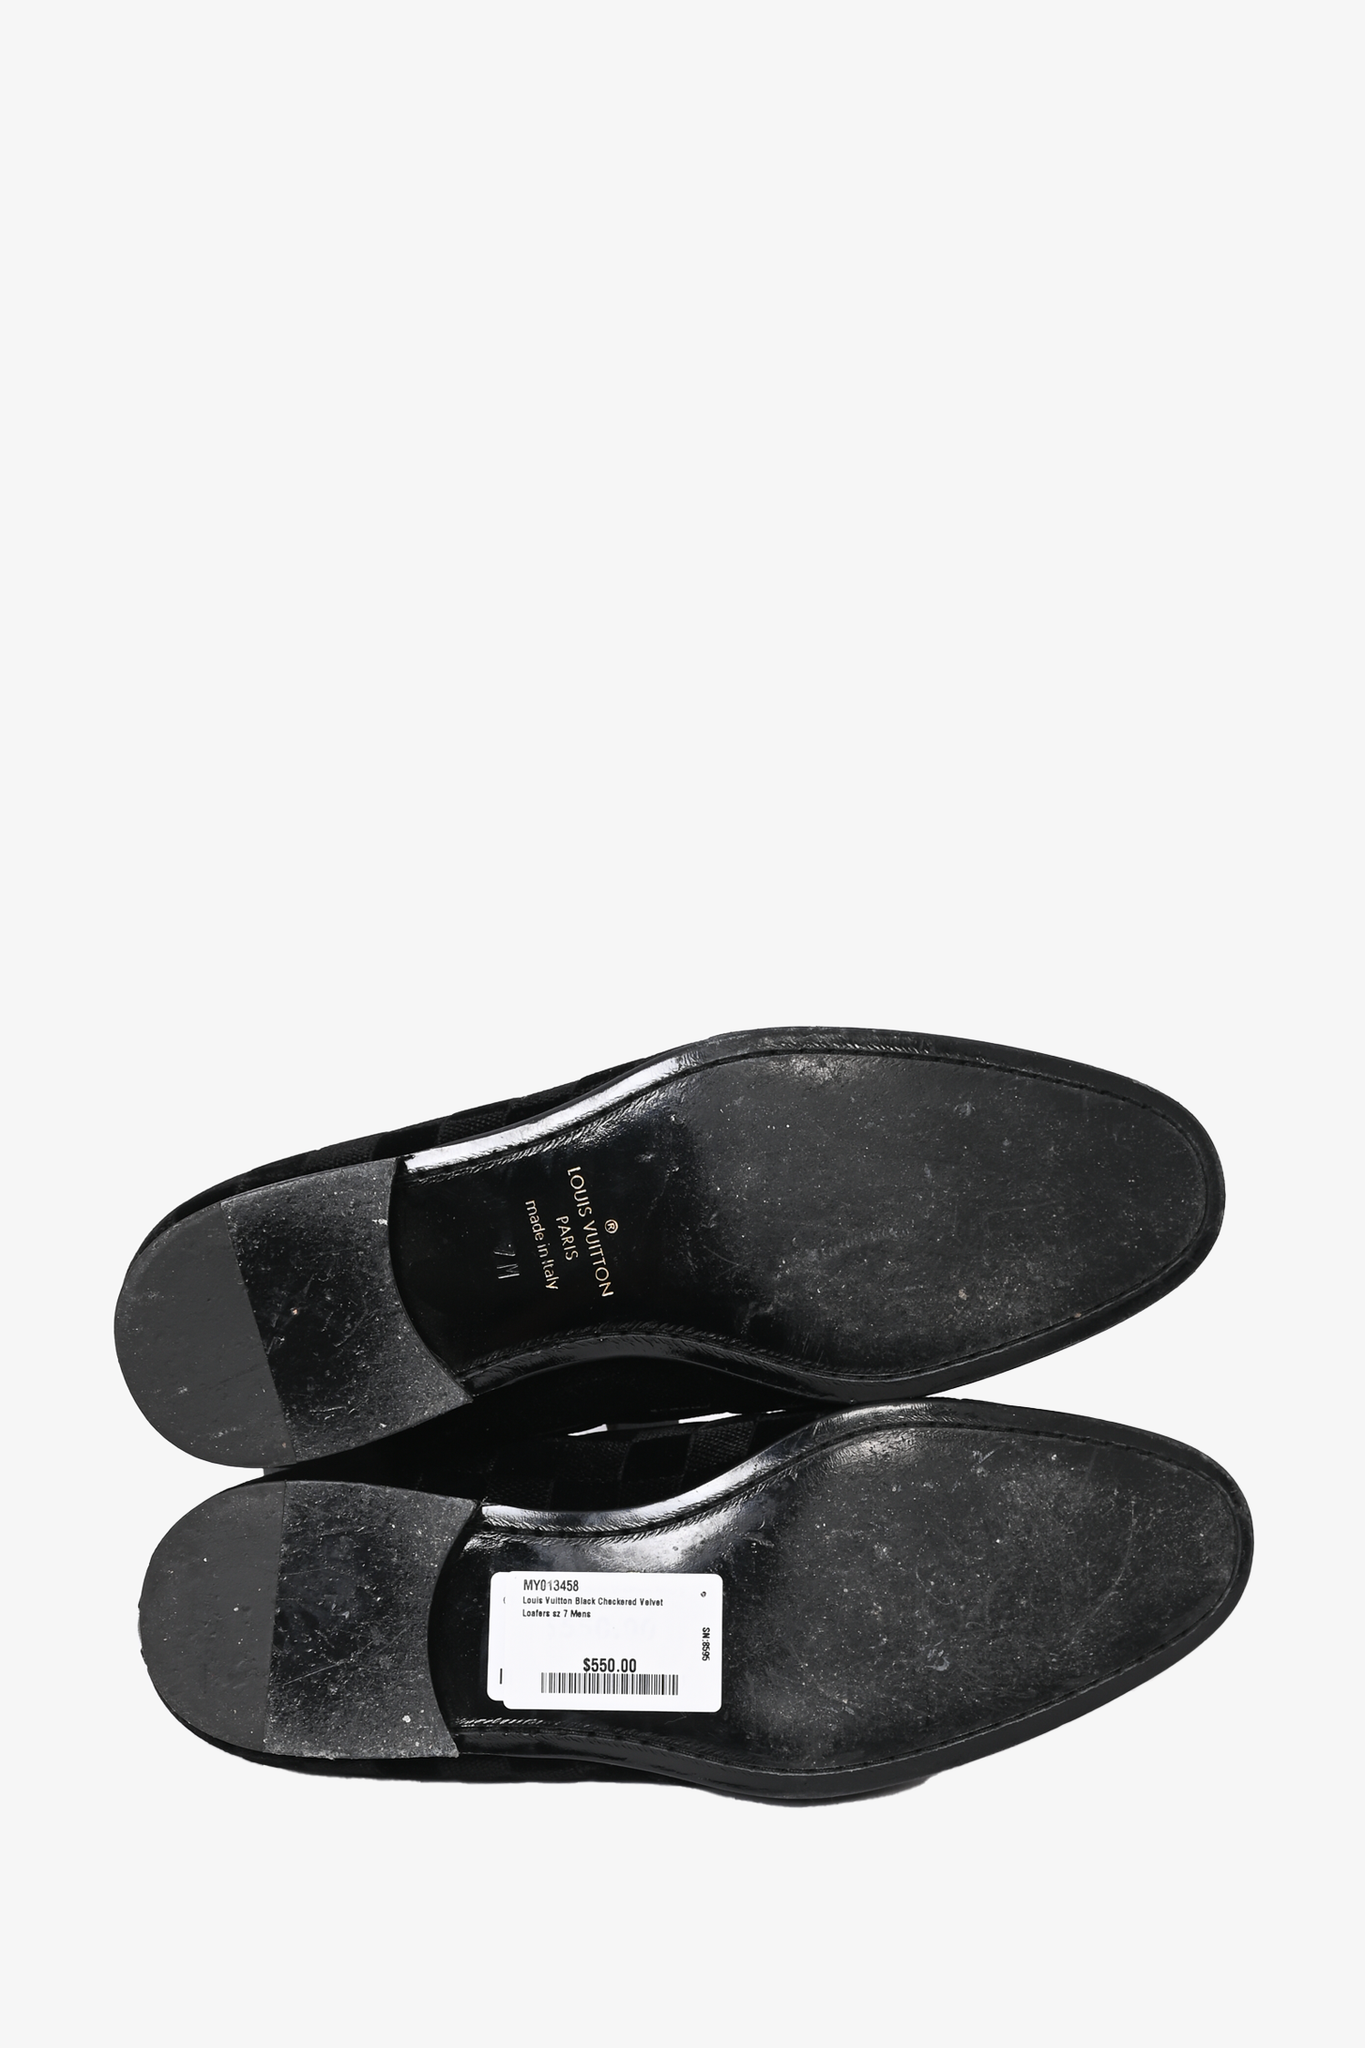 Louis Vuitton Black Checkered Velvet Loafers Size 7 Mens